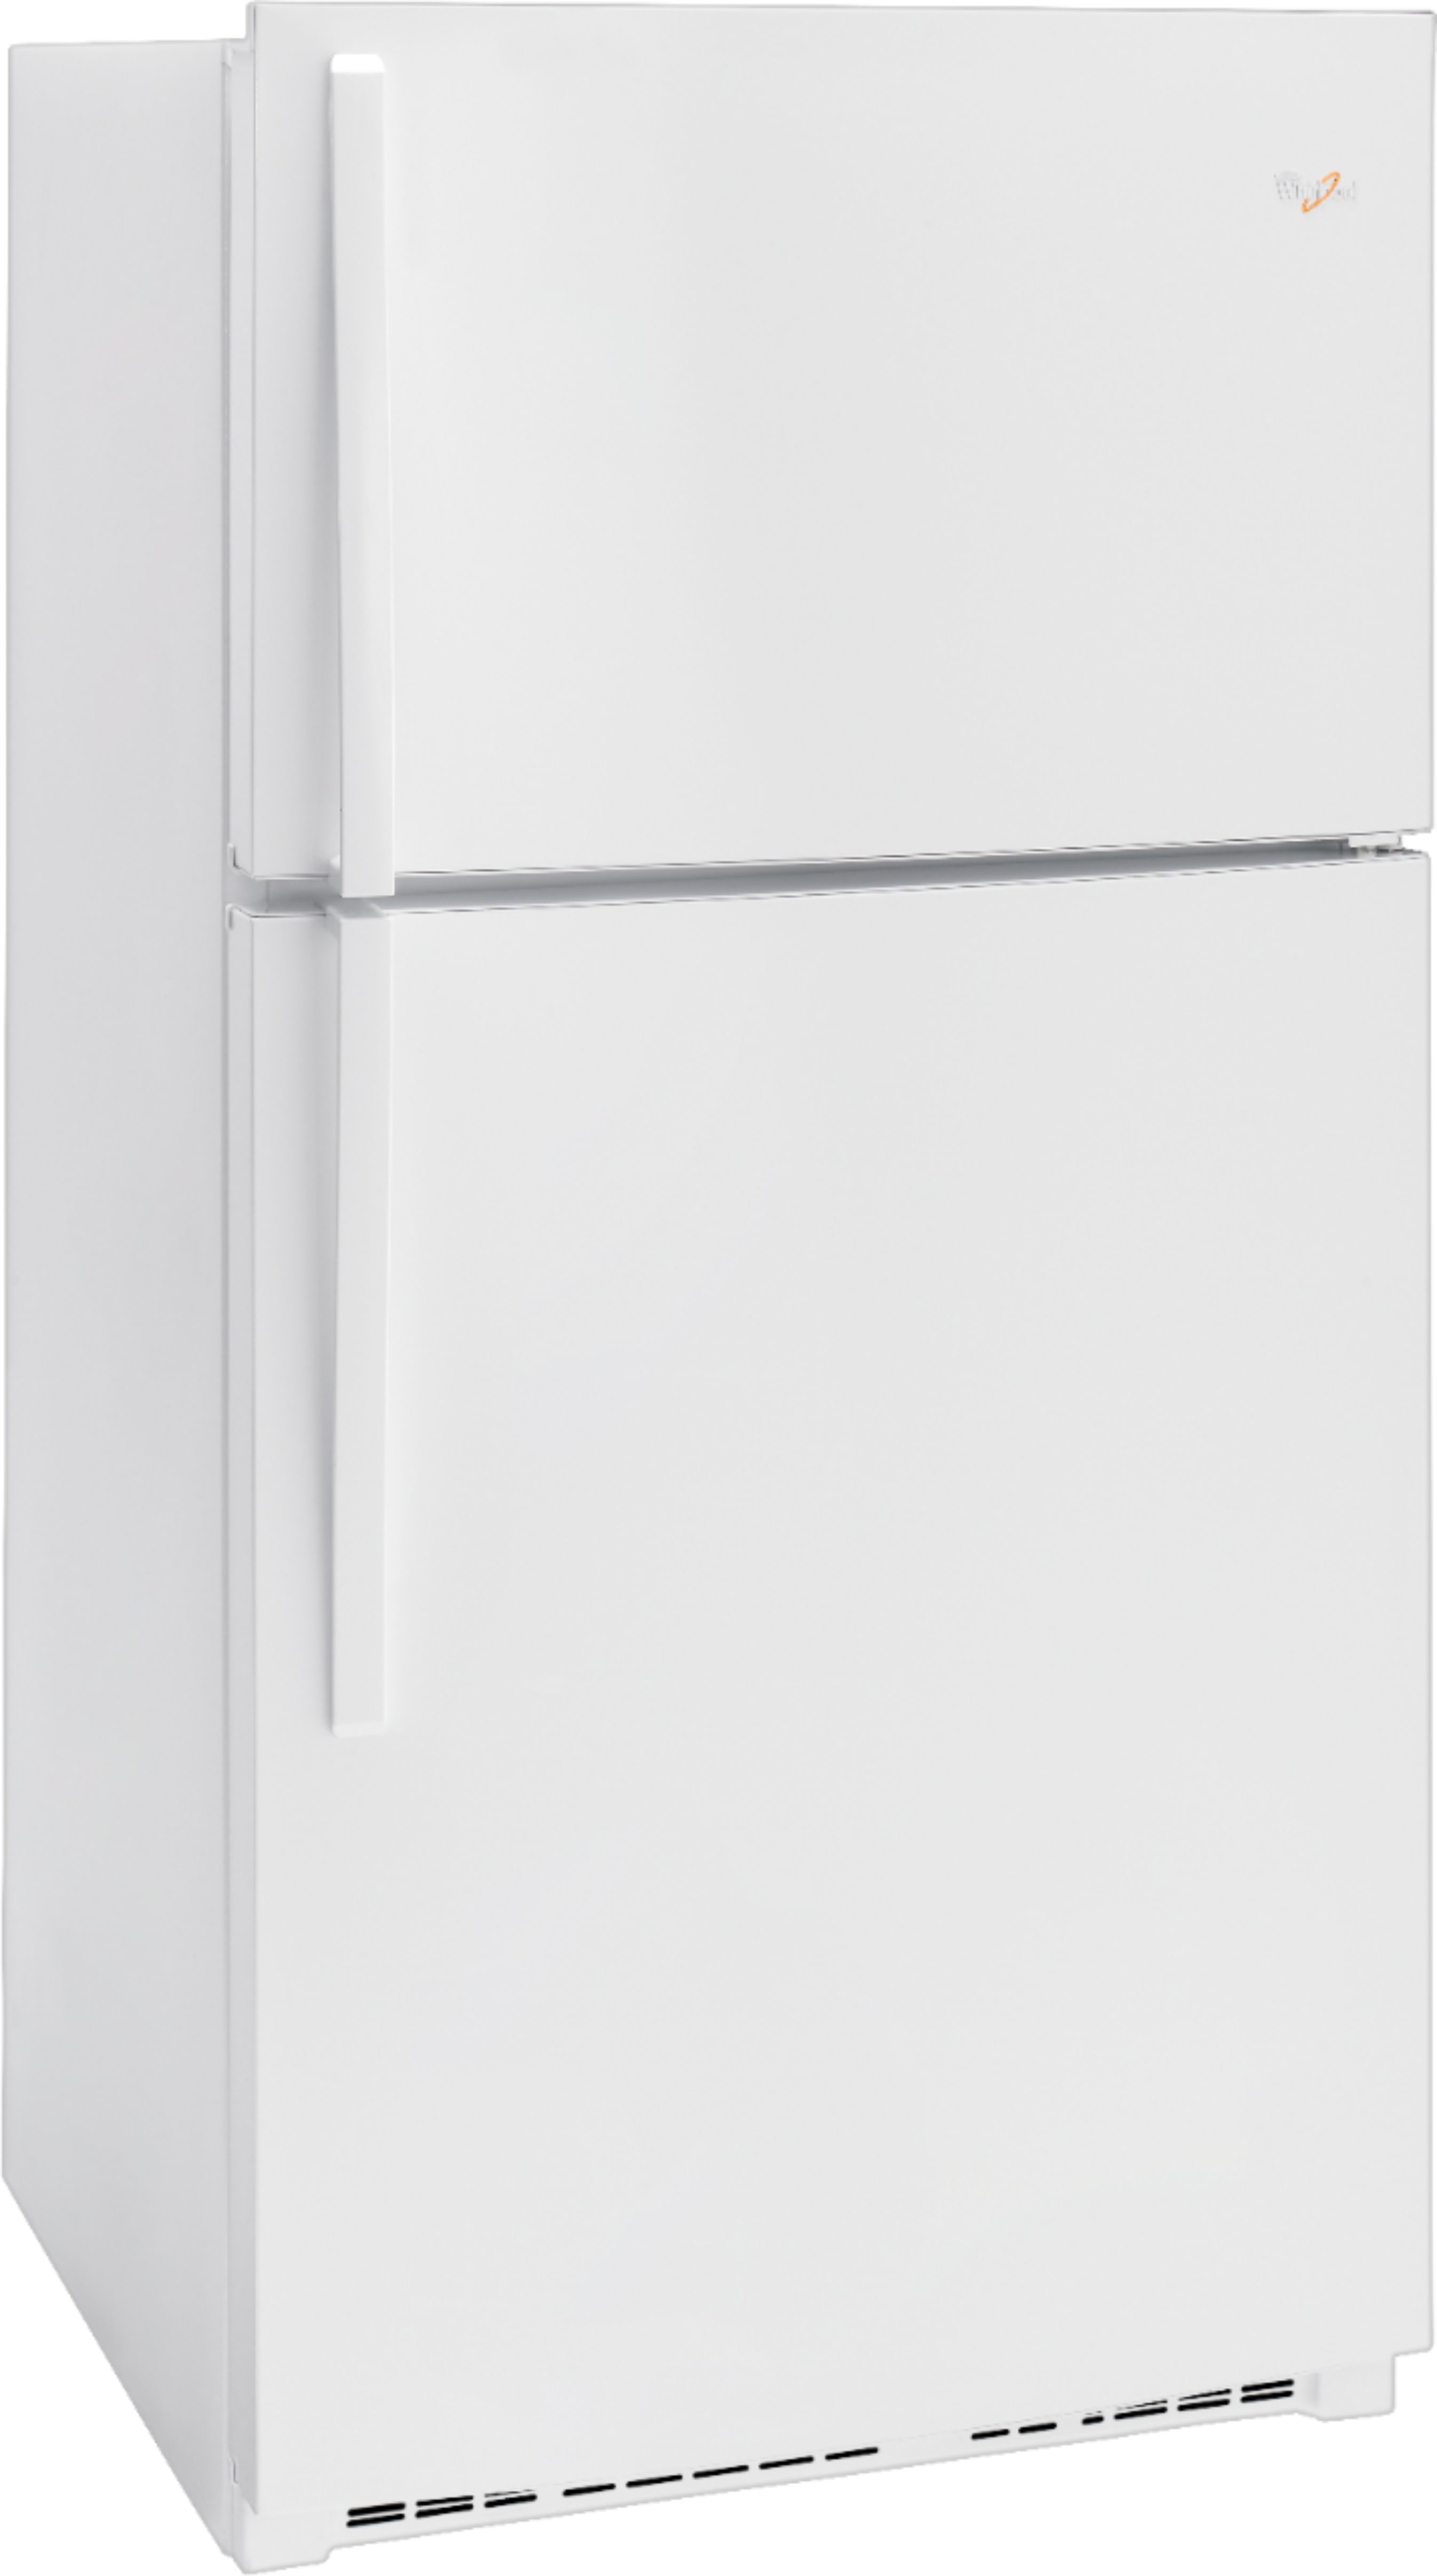 Angle View: Whirlpool - 21.3 Cu. Ft. Top-Freezer Refrigerator - White